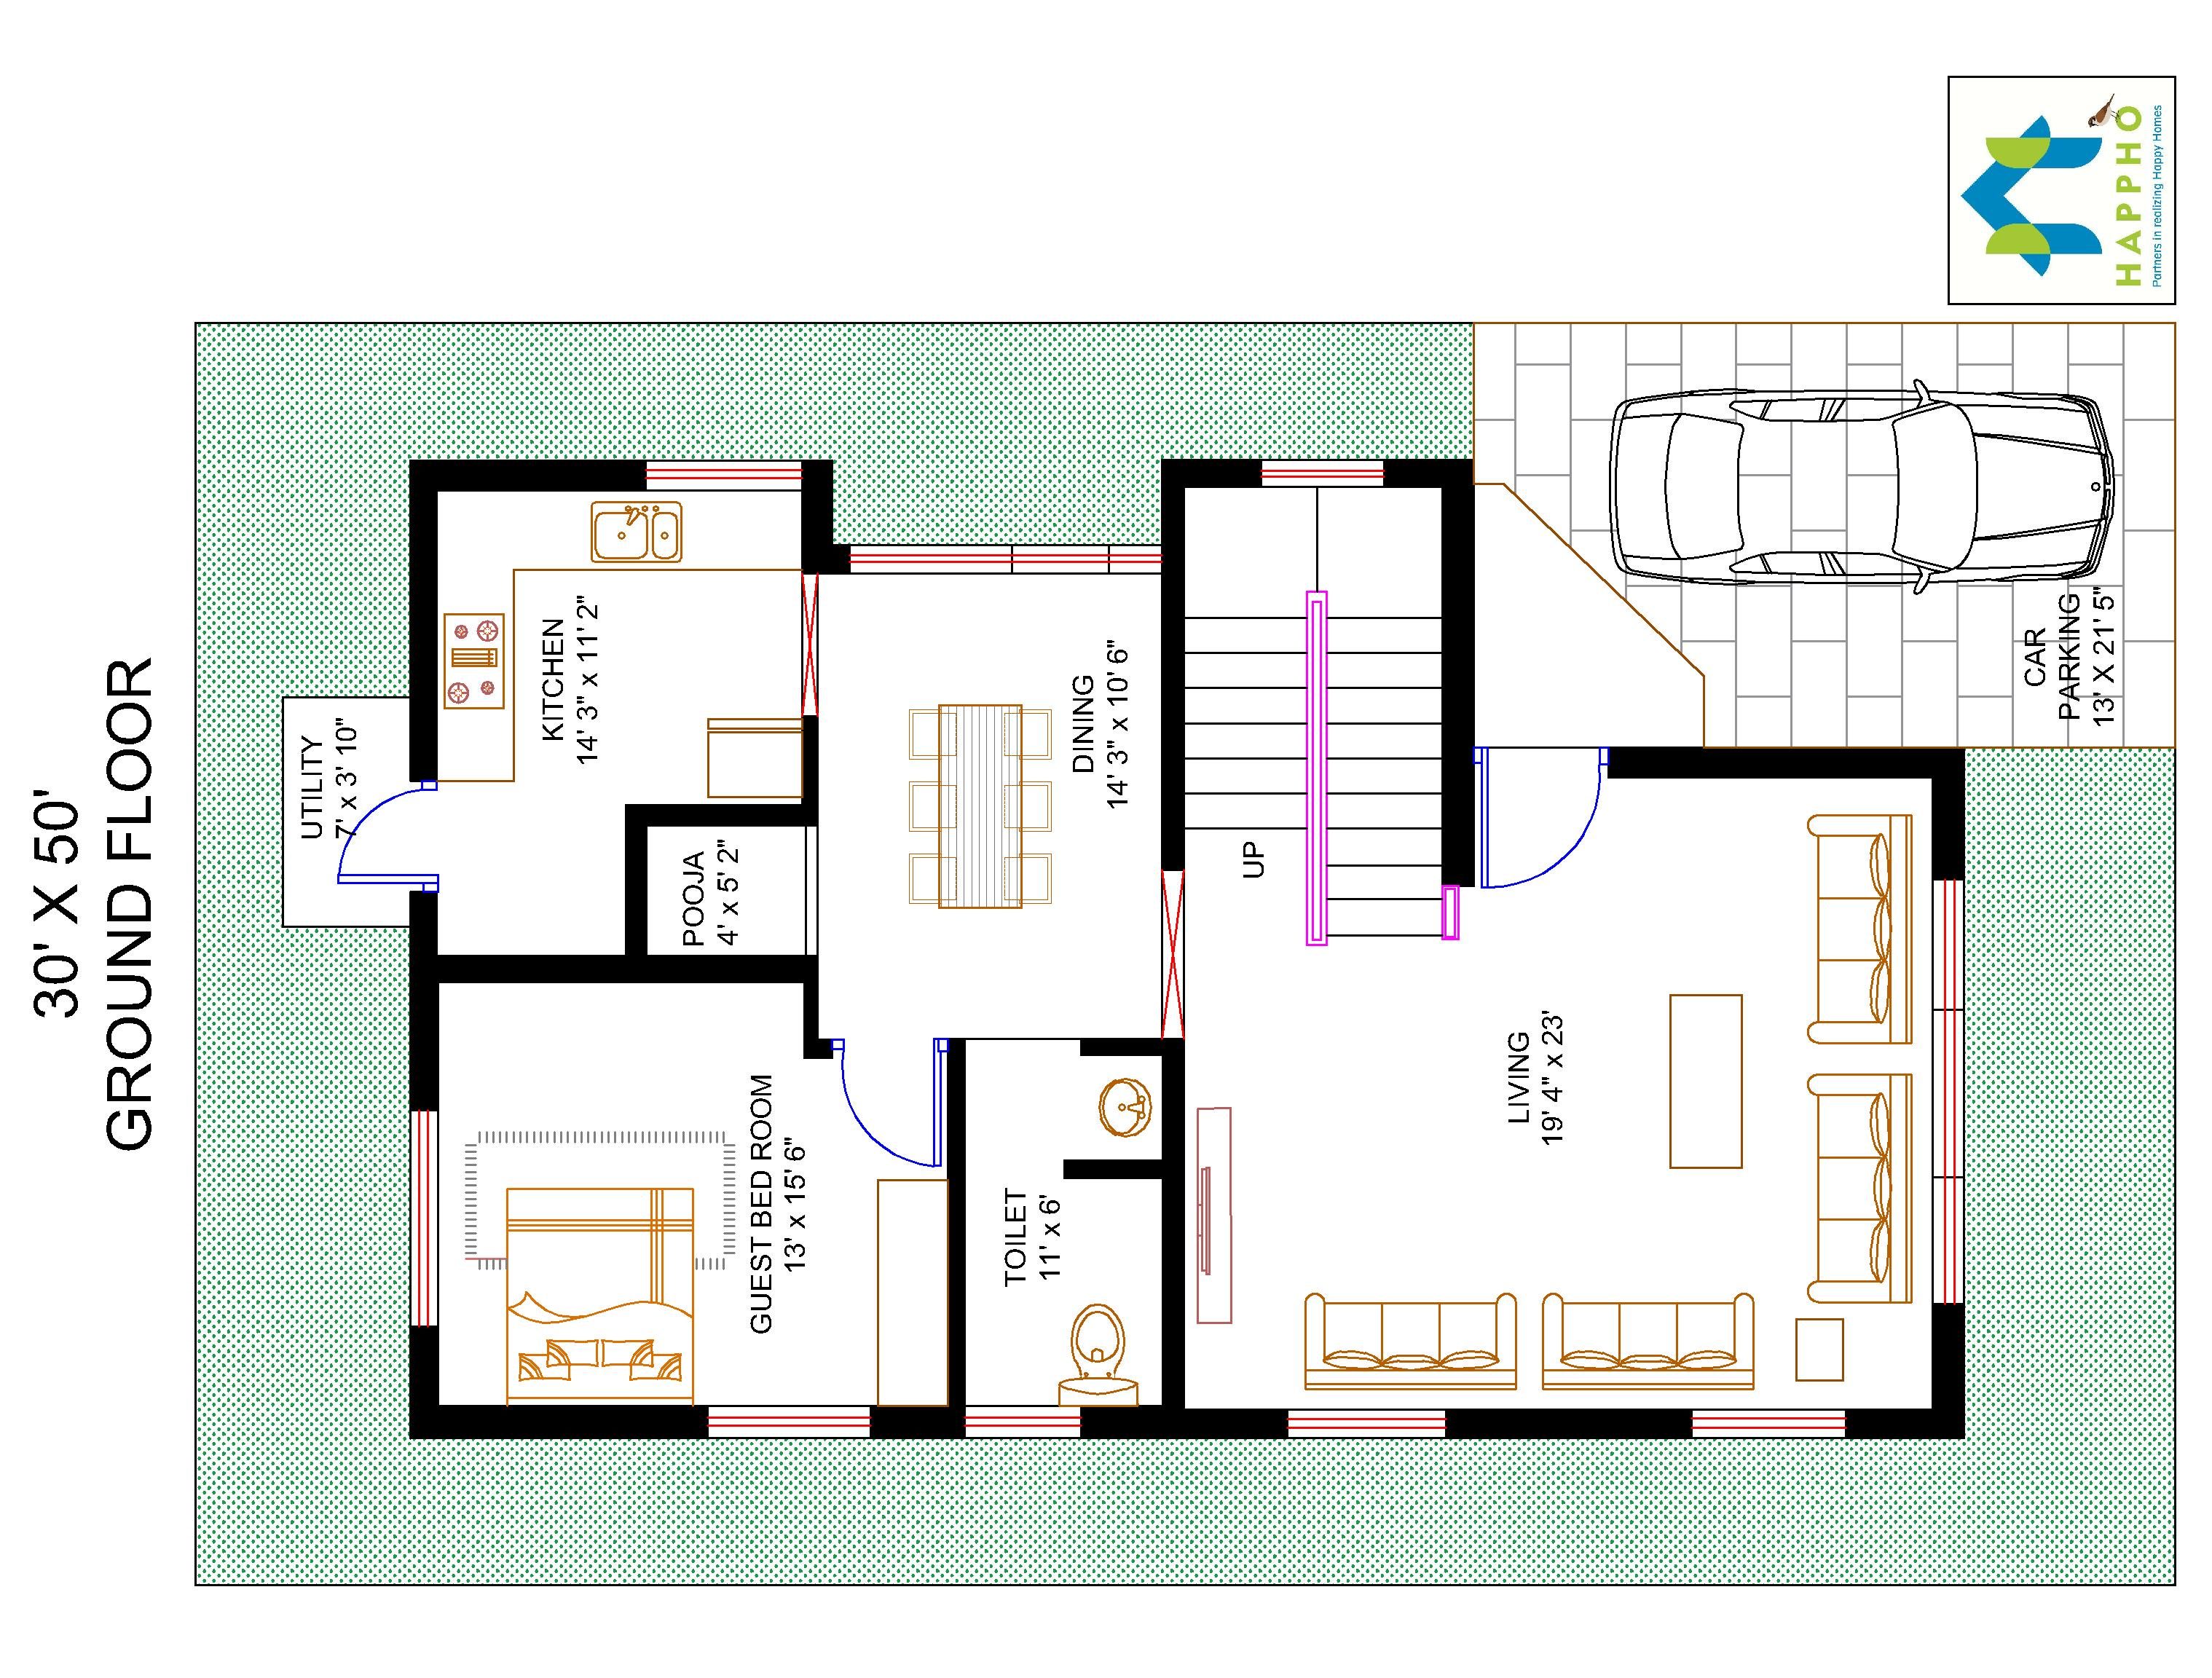 Floor Plan for 30 X 50 Plot 3BHK (1500 Square Feet/166